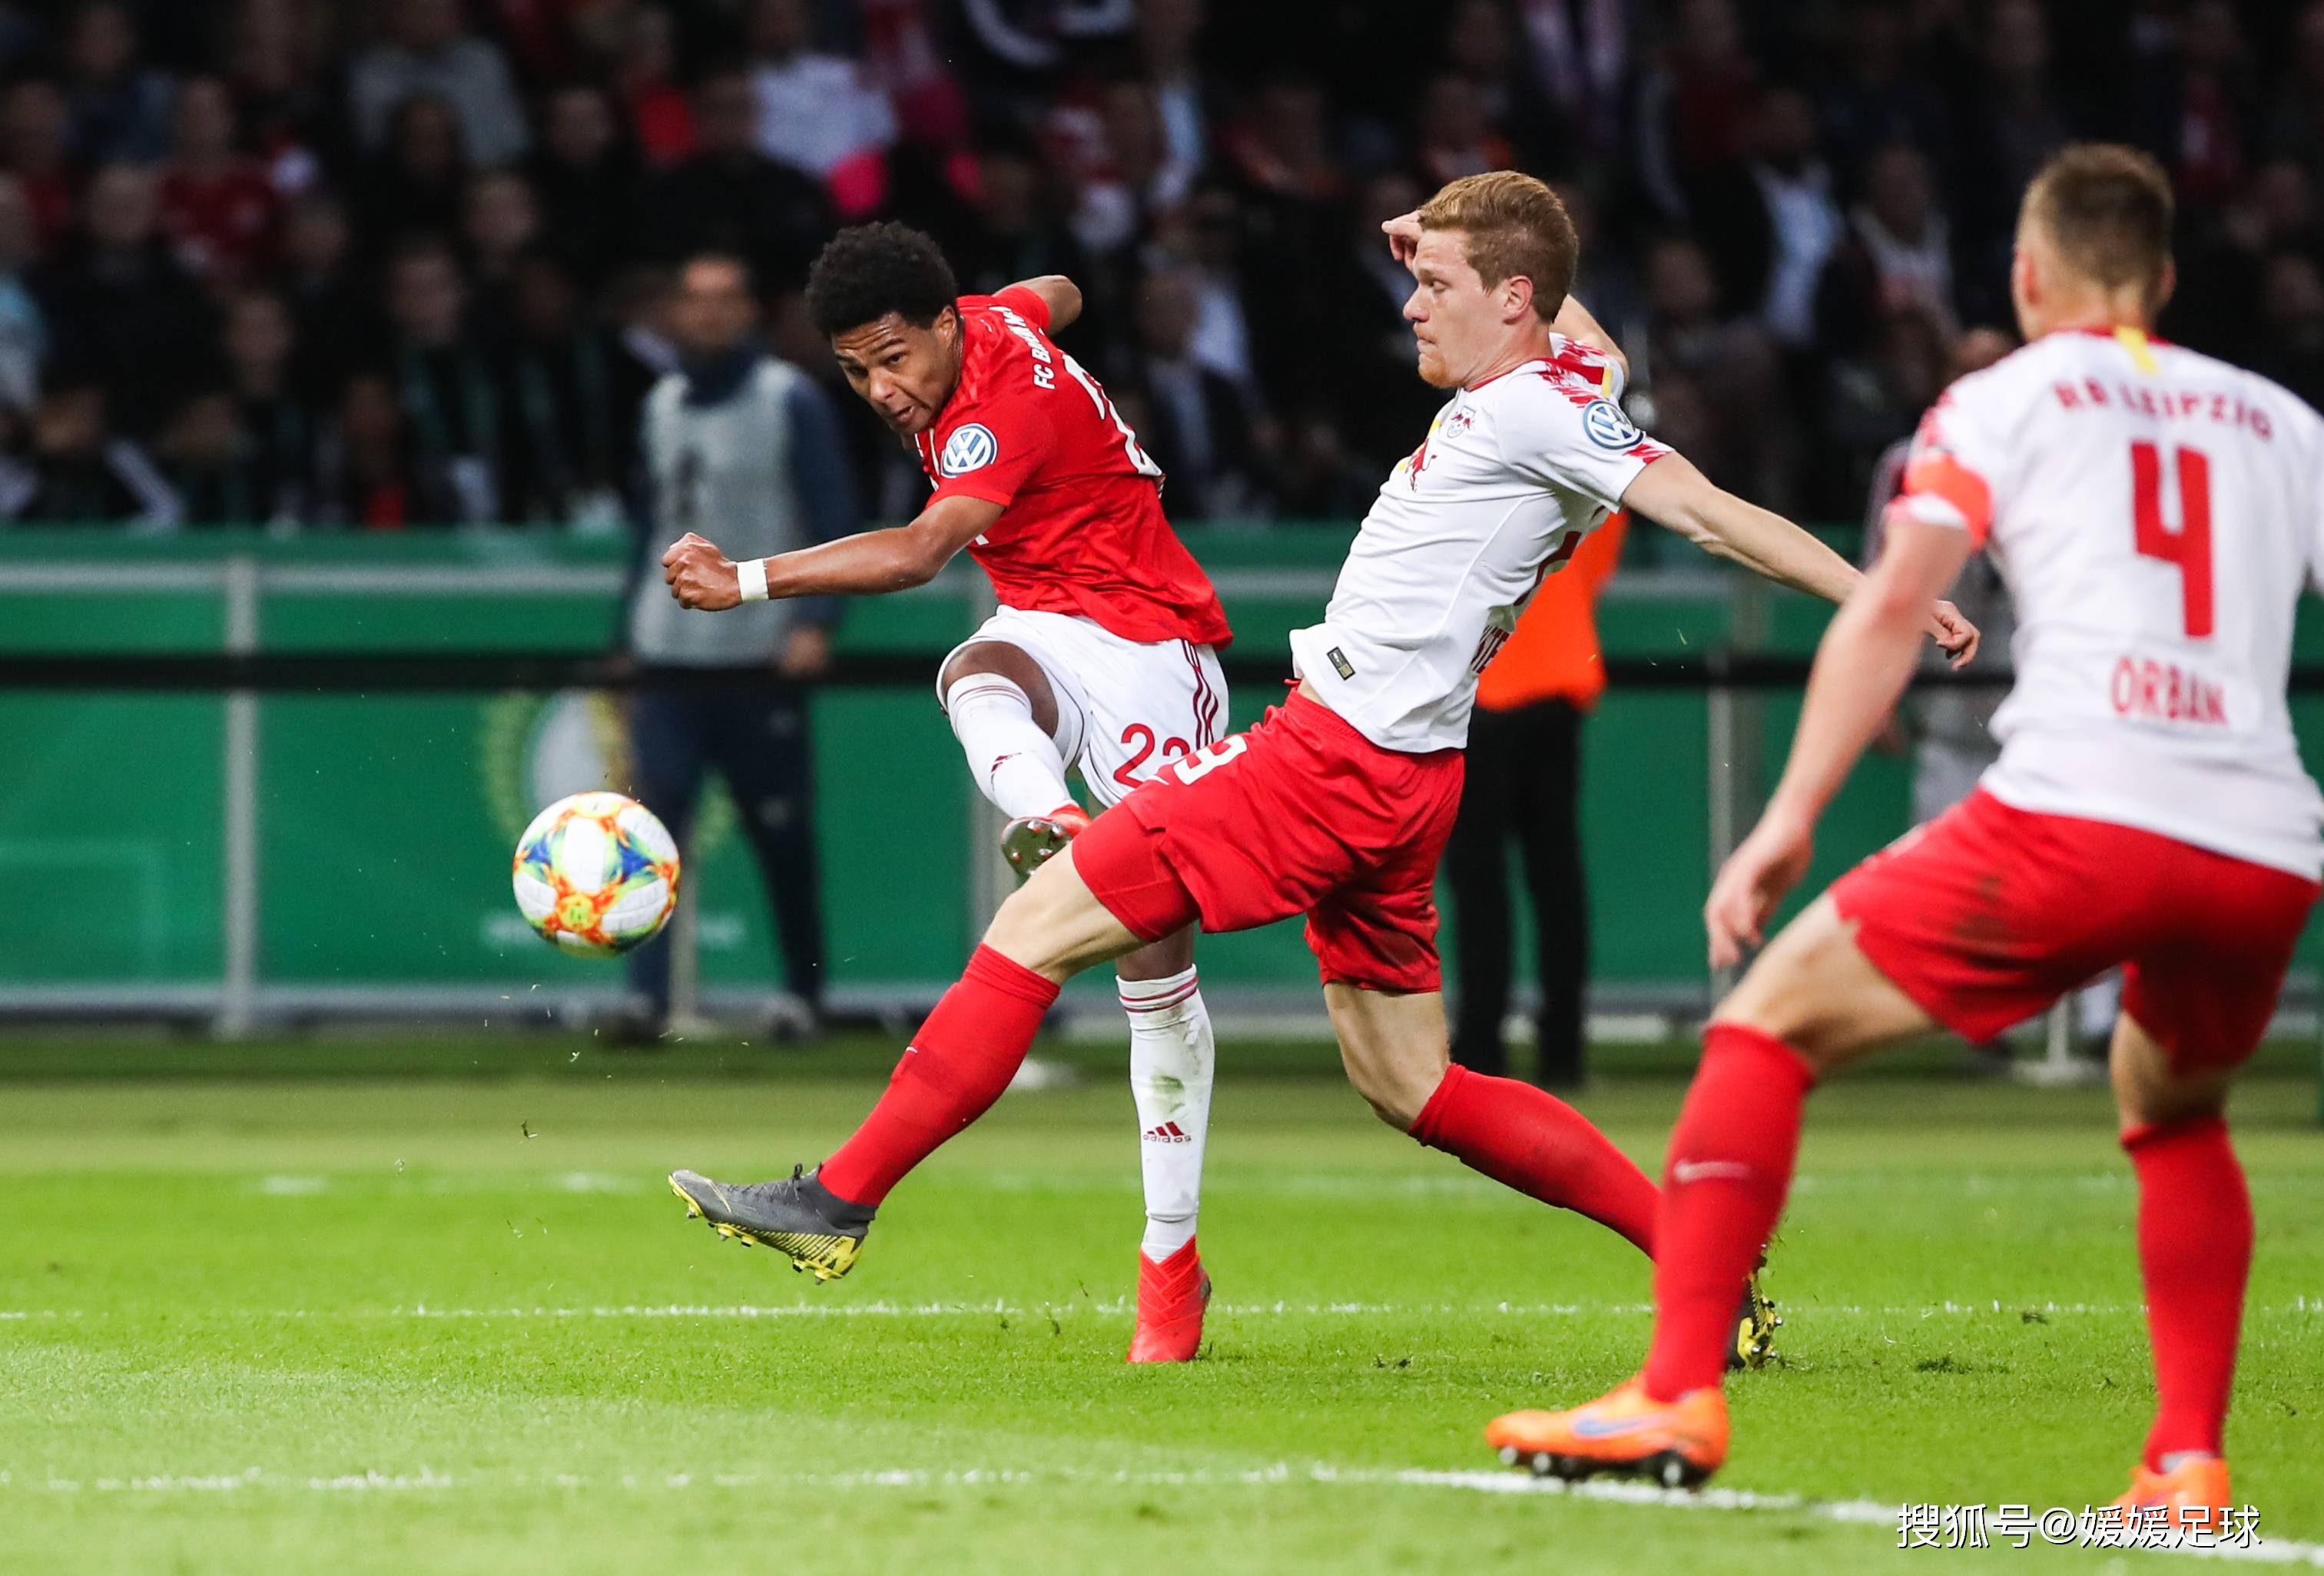 【168sports】拜仁慕尼黑对阵霍芬海姆，赫尔城对阵诺维奇